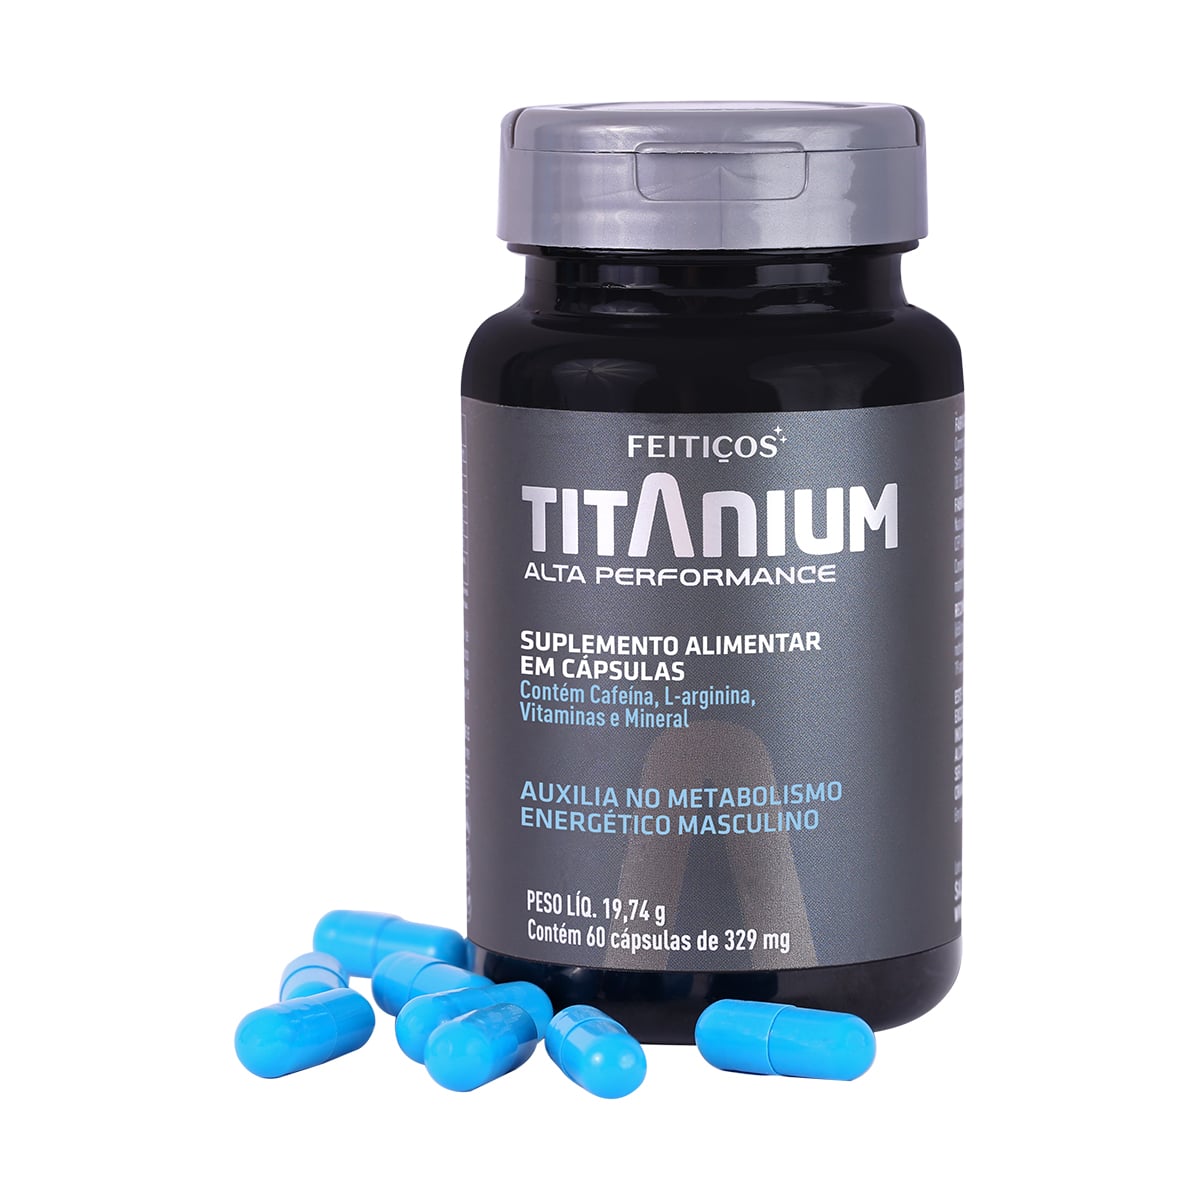 Titanium Alta Performance - Suplemento Alimentar Masculino em Cápsulas - 329mg